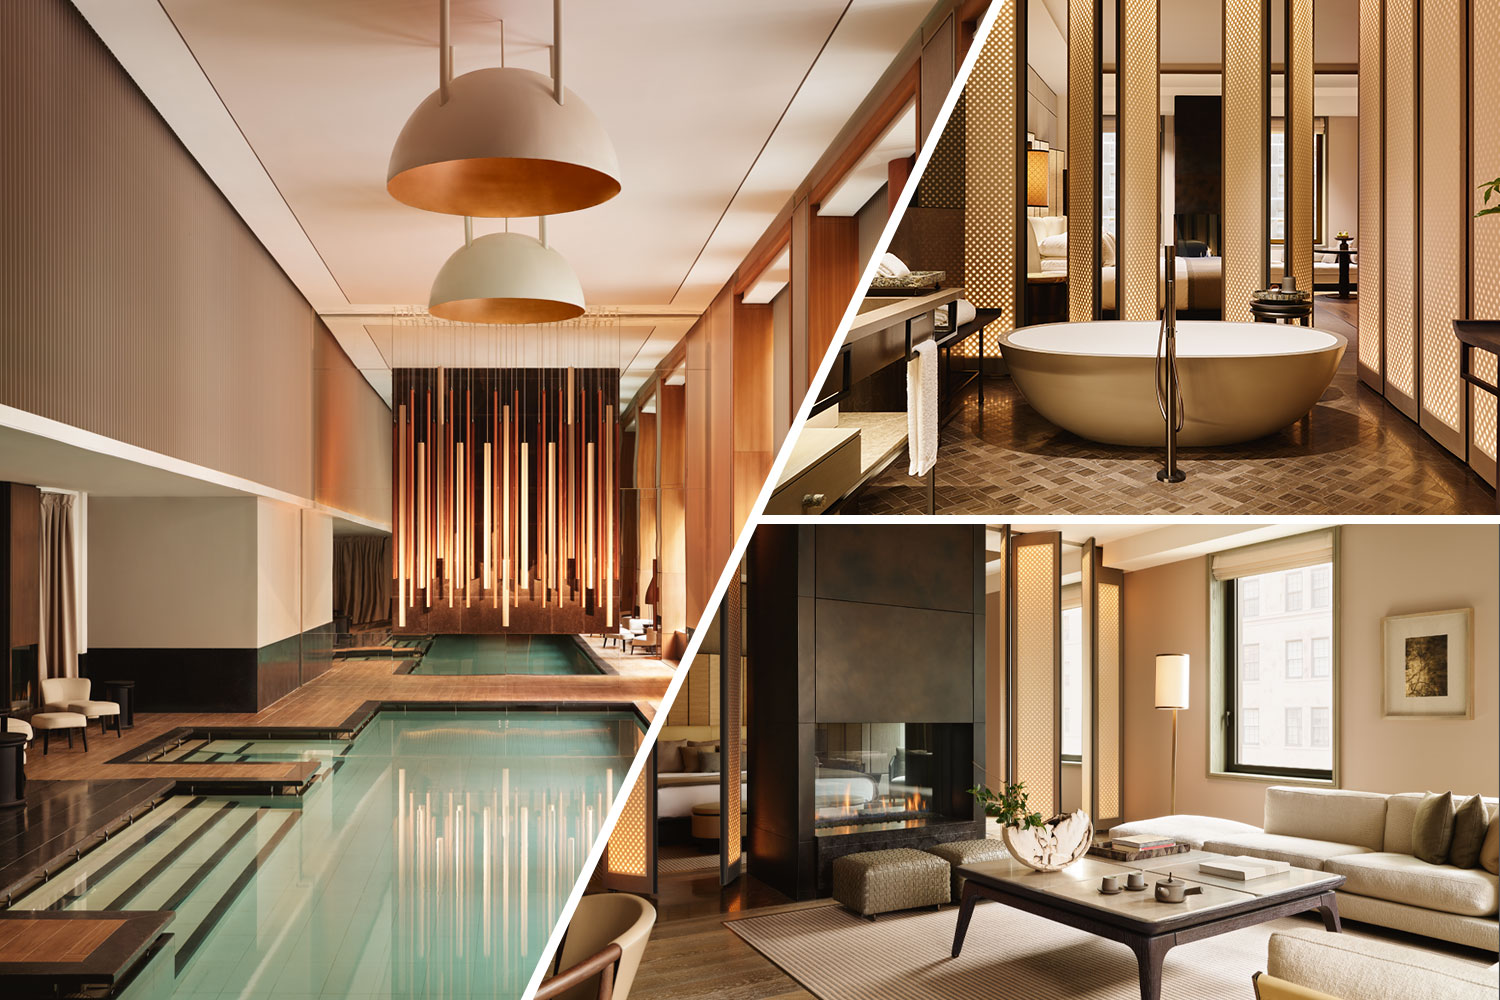 Luxury Hotel Suites in New York City